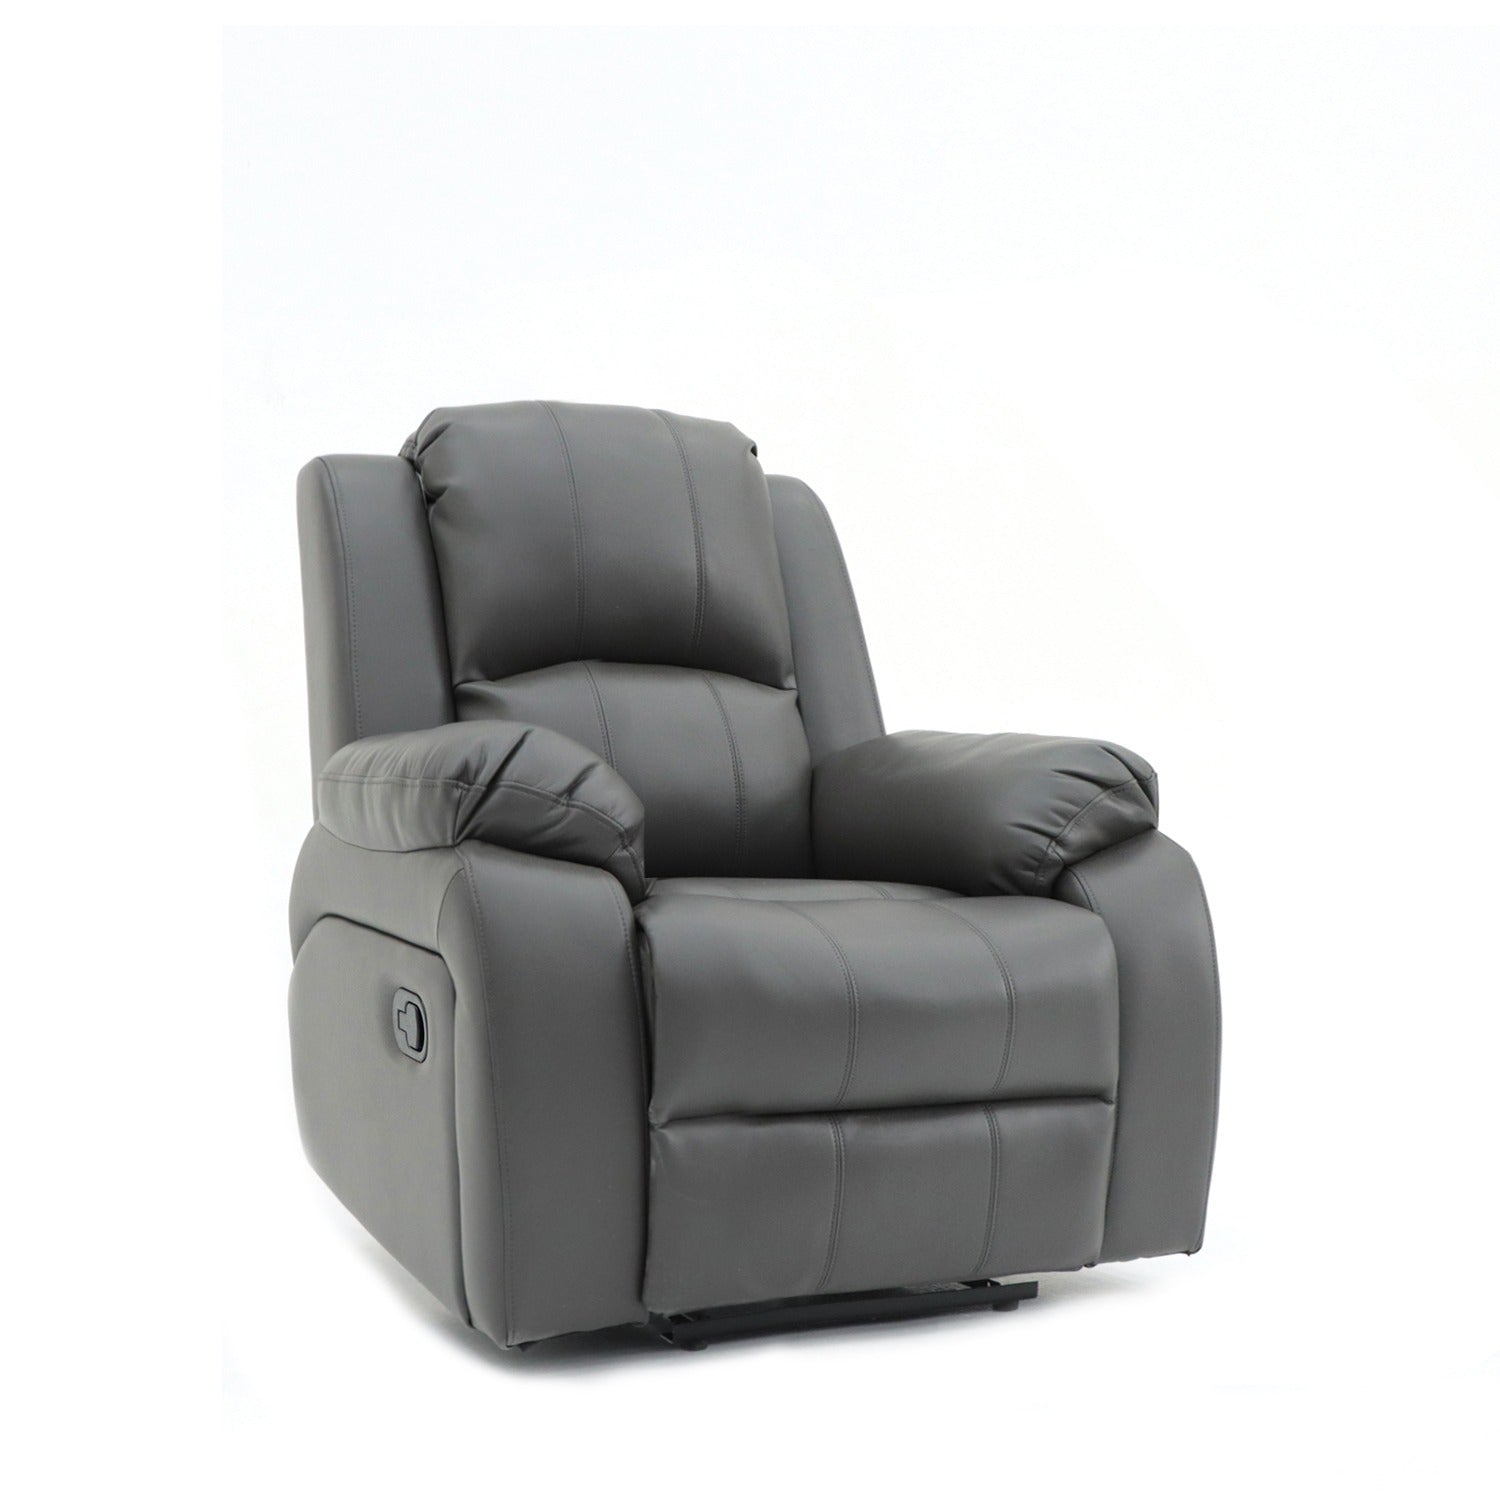 Darwin Manual Recliner Chair Grey Leather